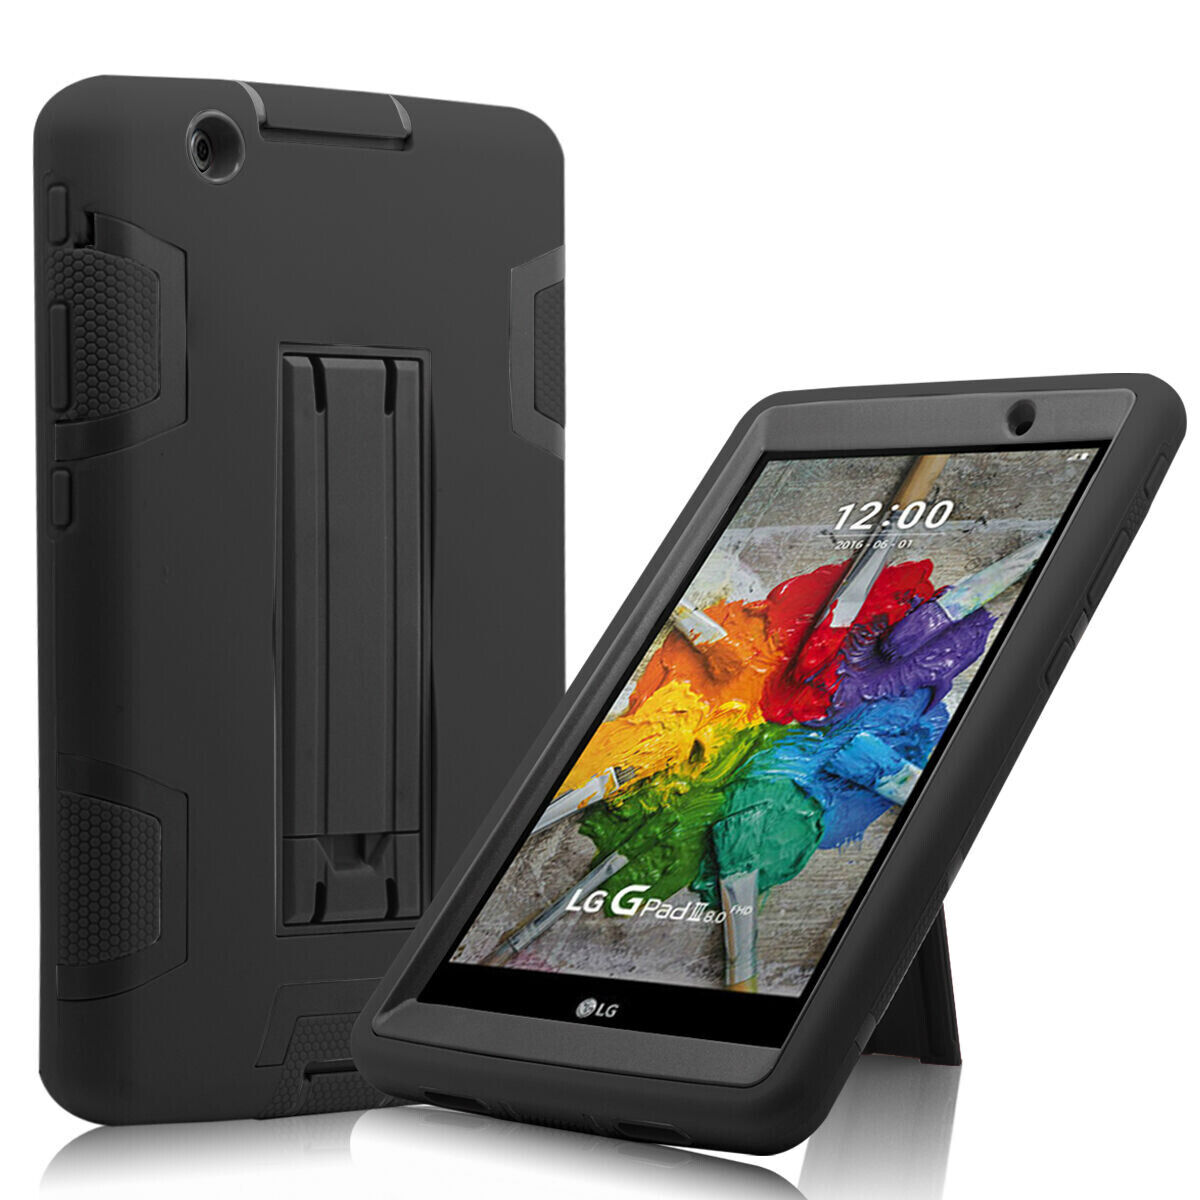 for LG G Pad III 3 8.0/LG Gpad X 8.0 Case,Hybrid Heavy Duty Protective Cover 